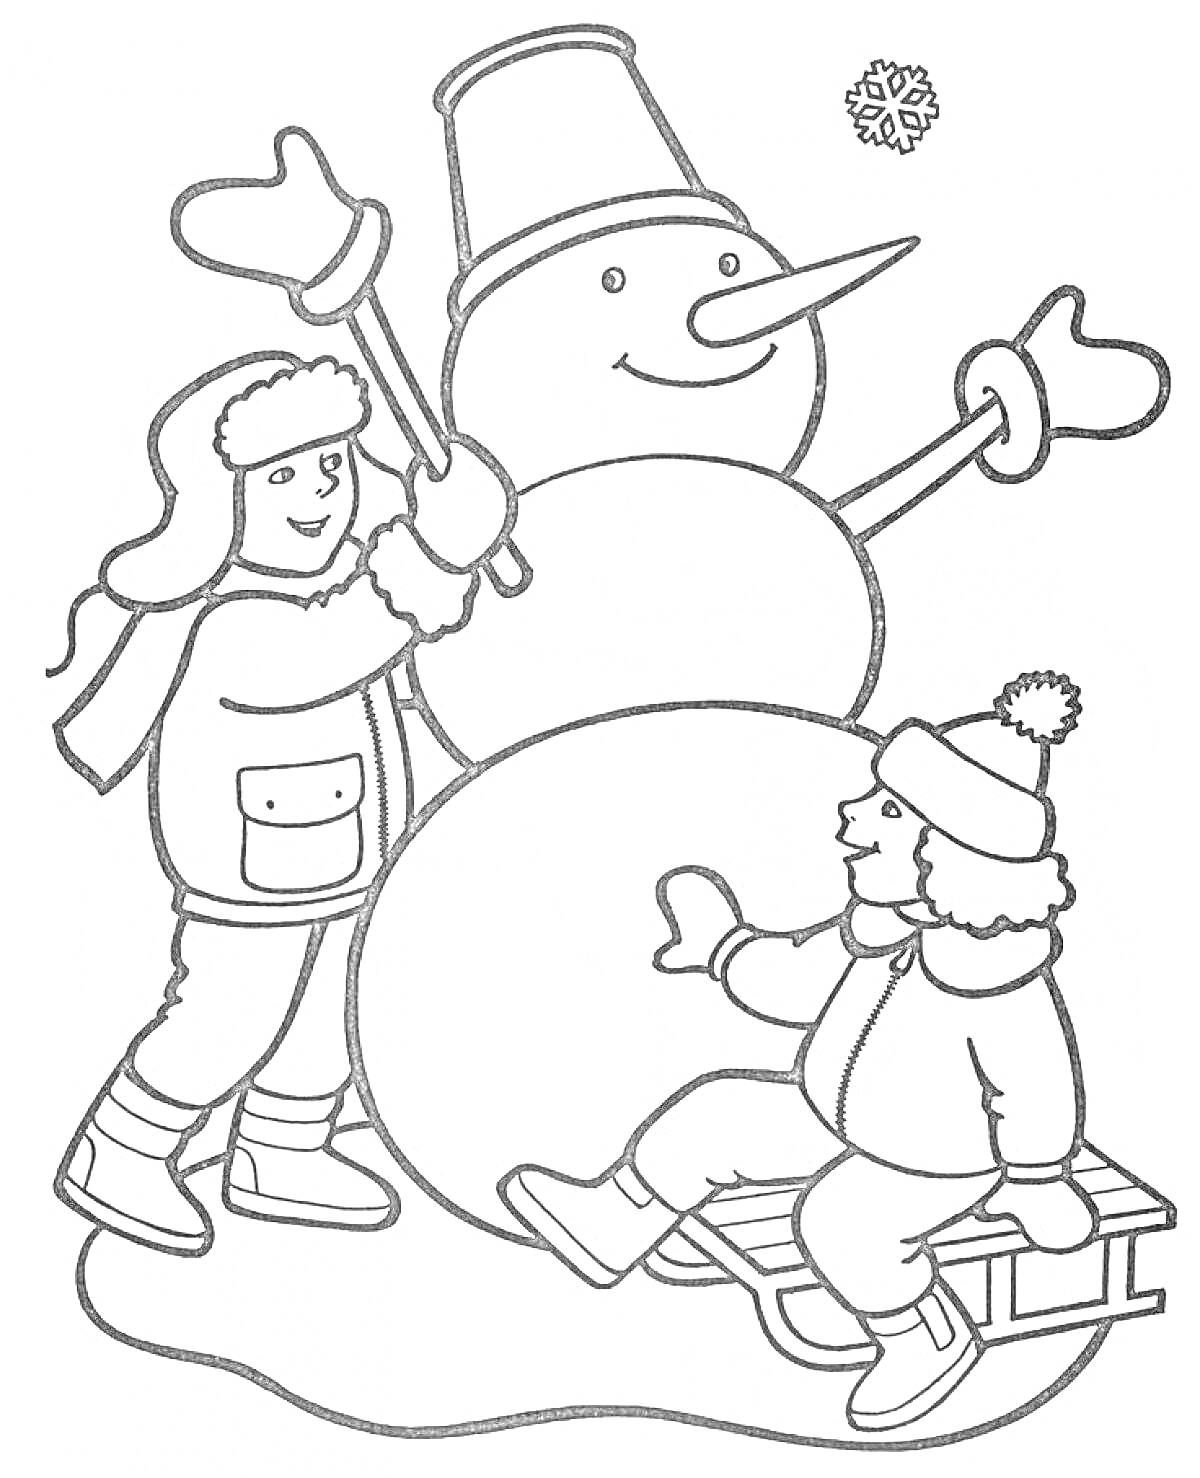 Дети лепят снеговика, один ребёнок на санках, снежинка, зима